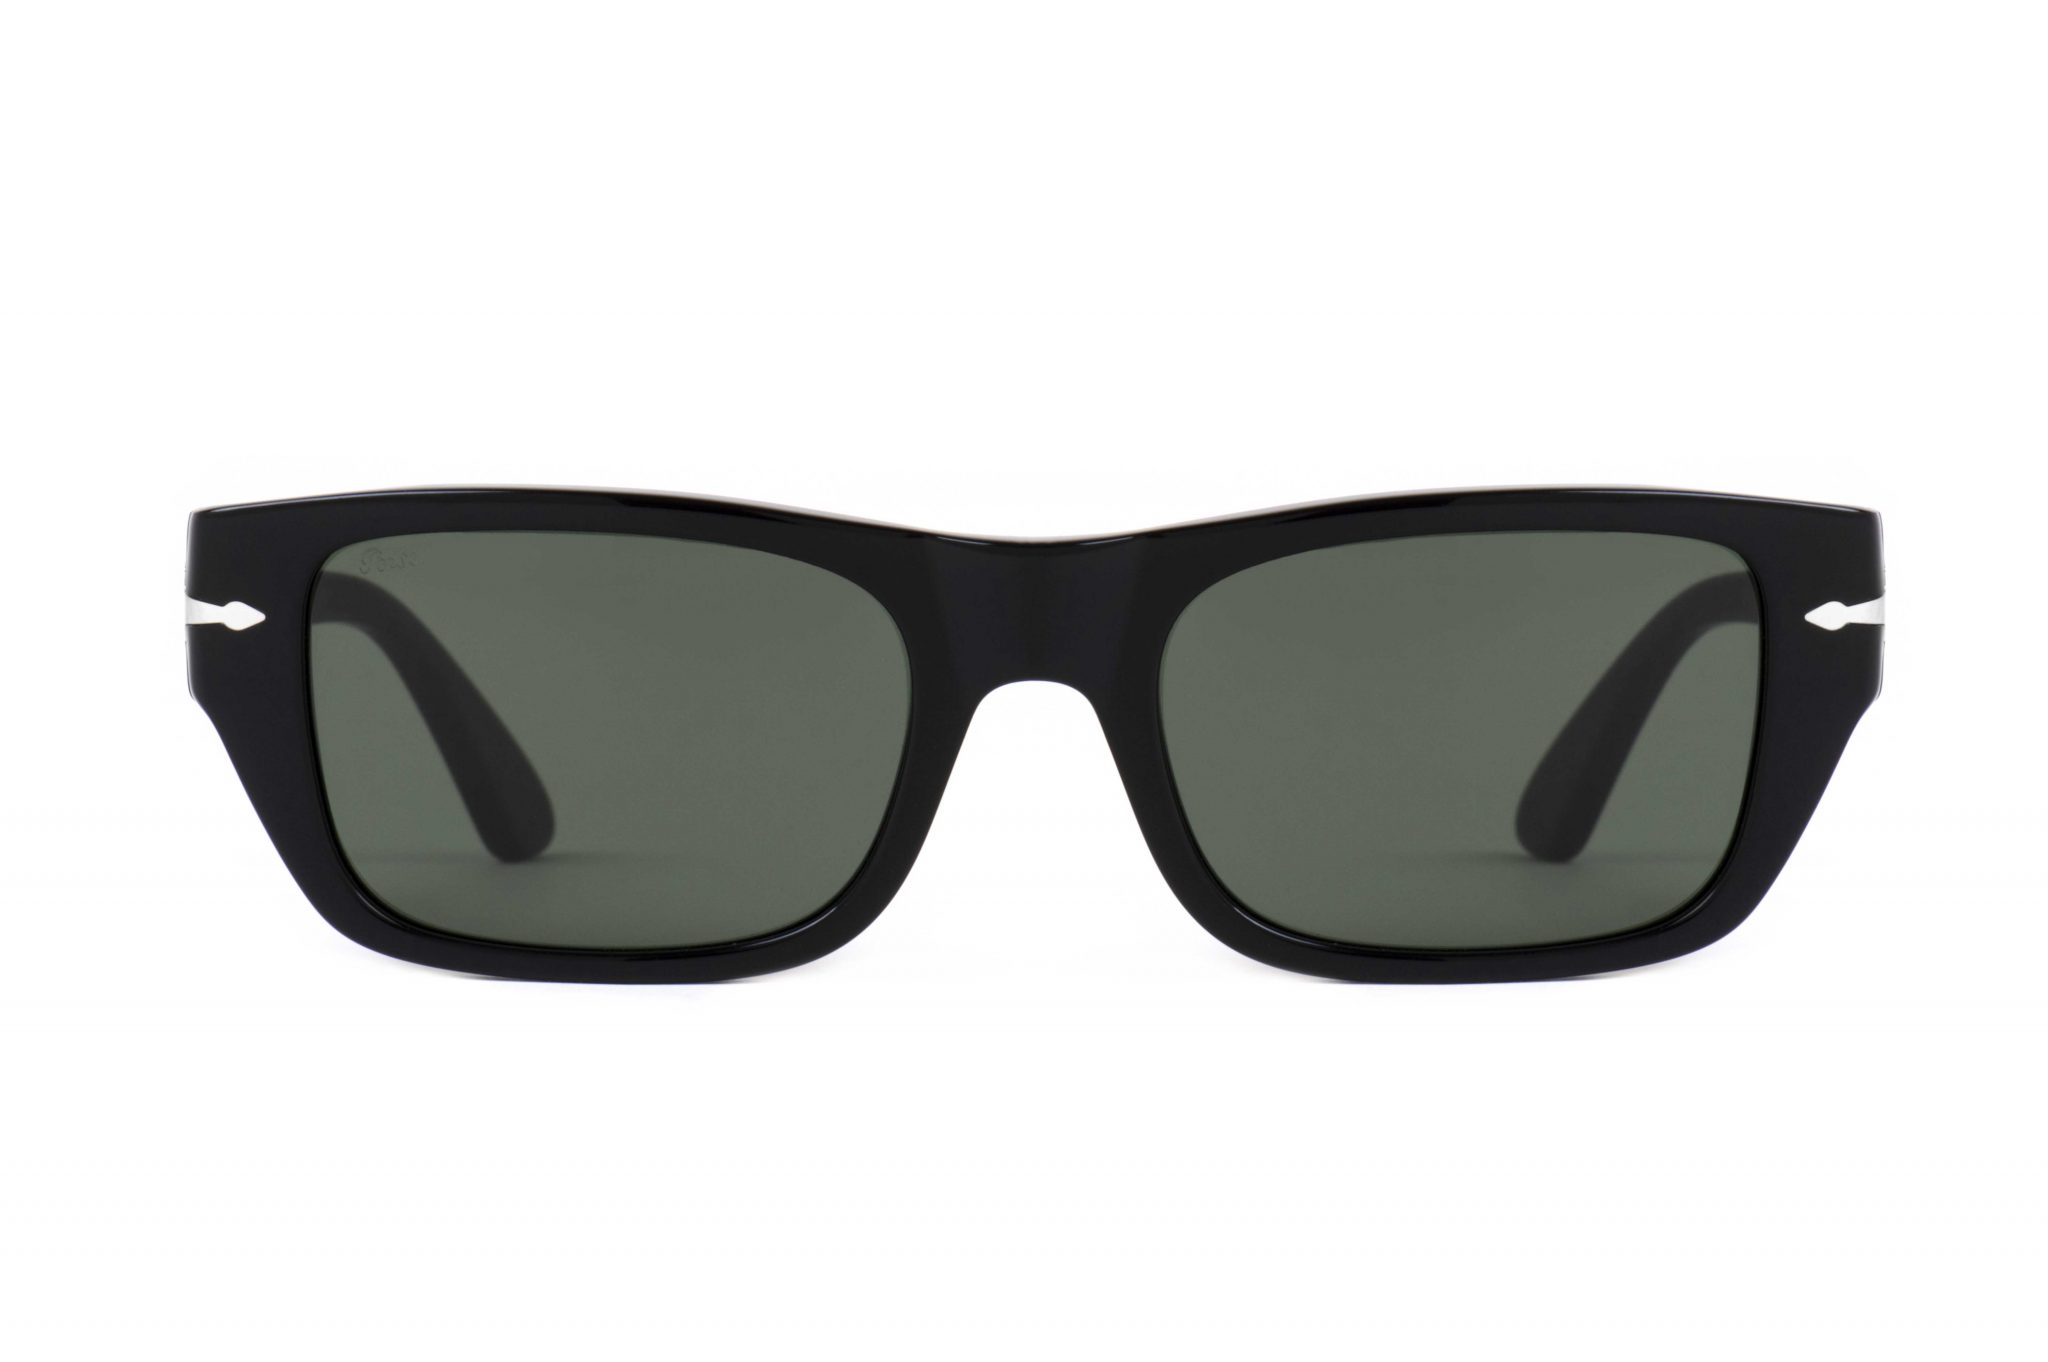 Persol Sunglasses Po 3268 S 9531 Green عالم النظارات السعودية